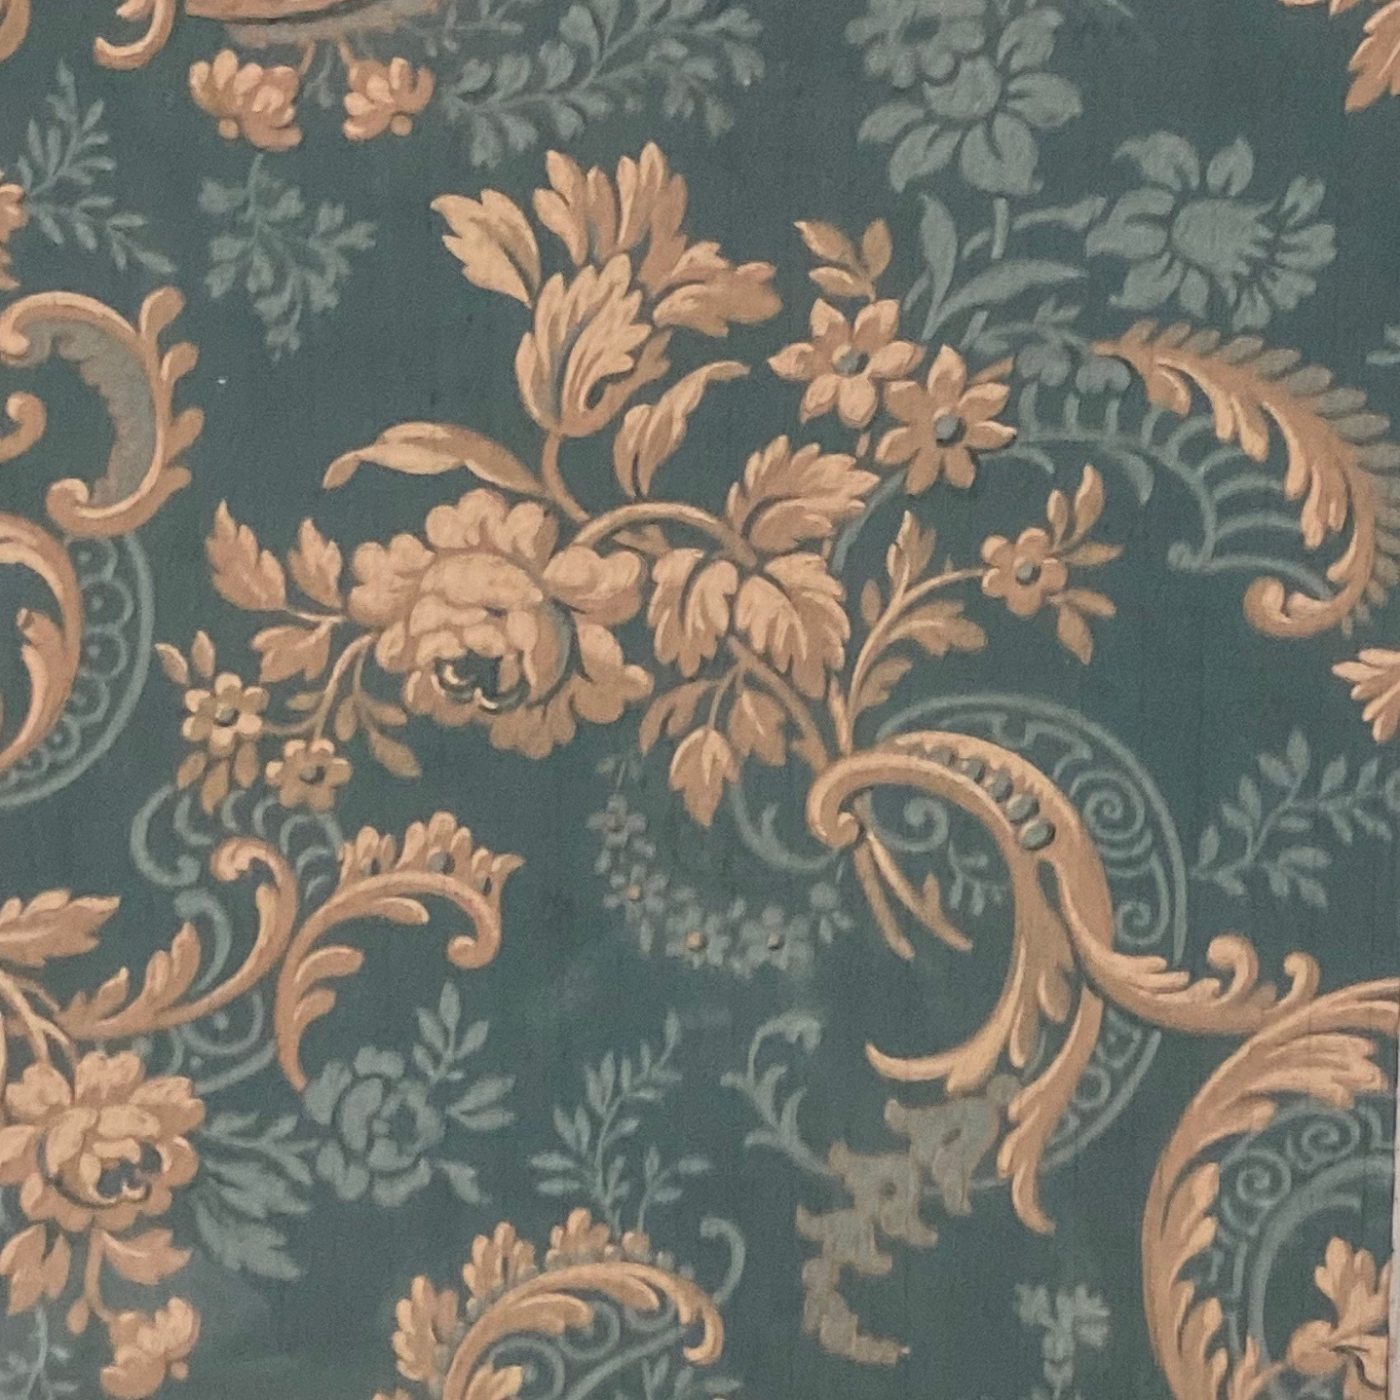 handpainted-textile-pattern0008